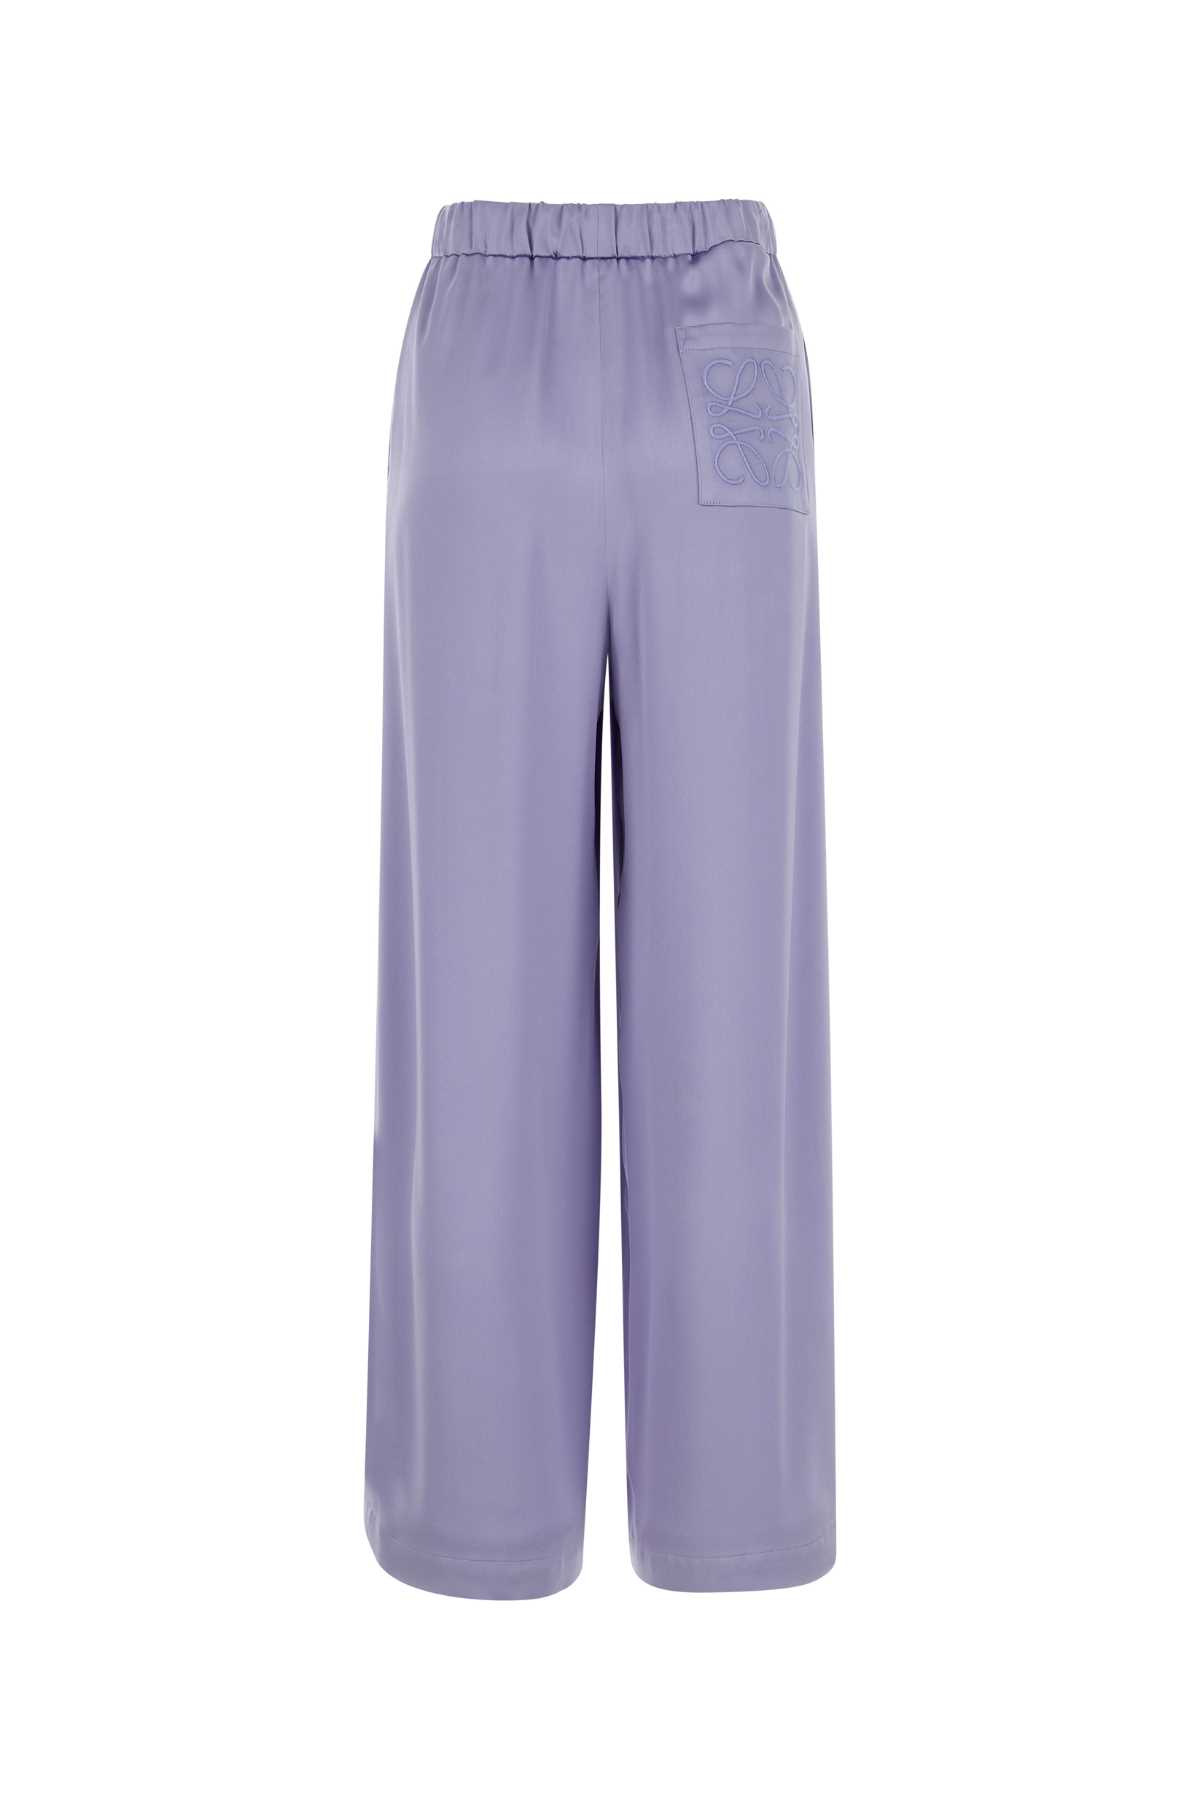 Loewe Lilac Satin Pyjama Trouser